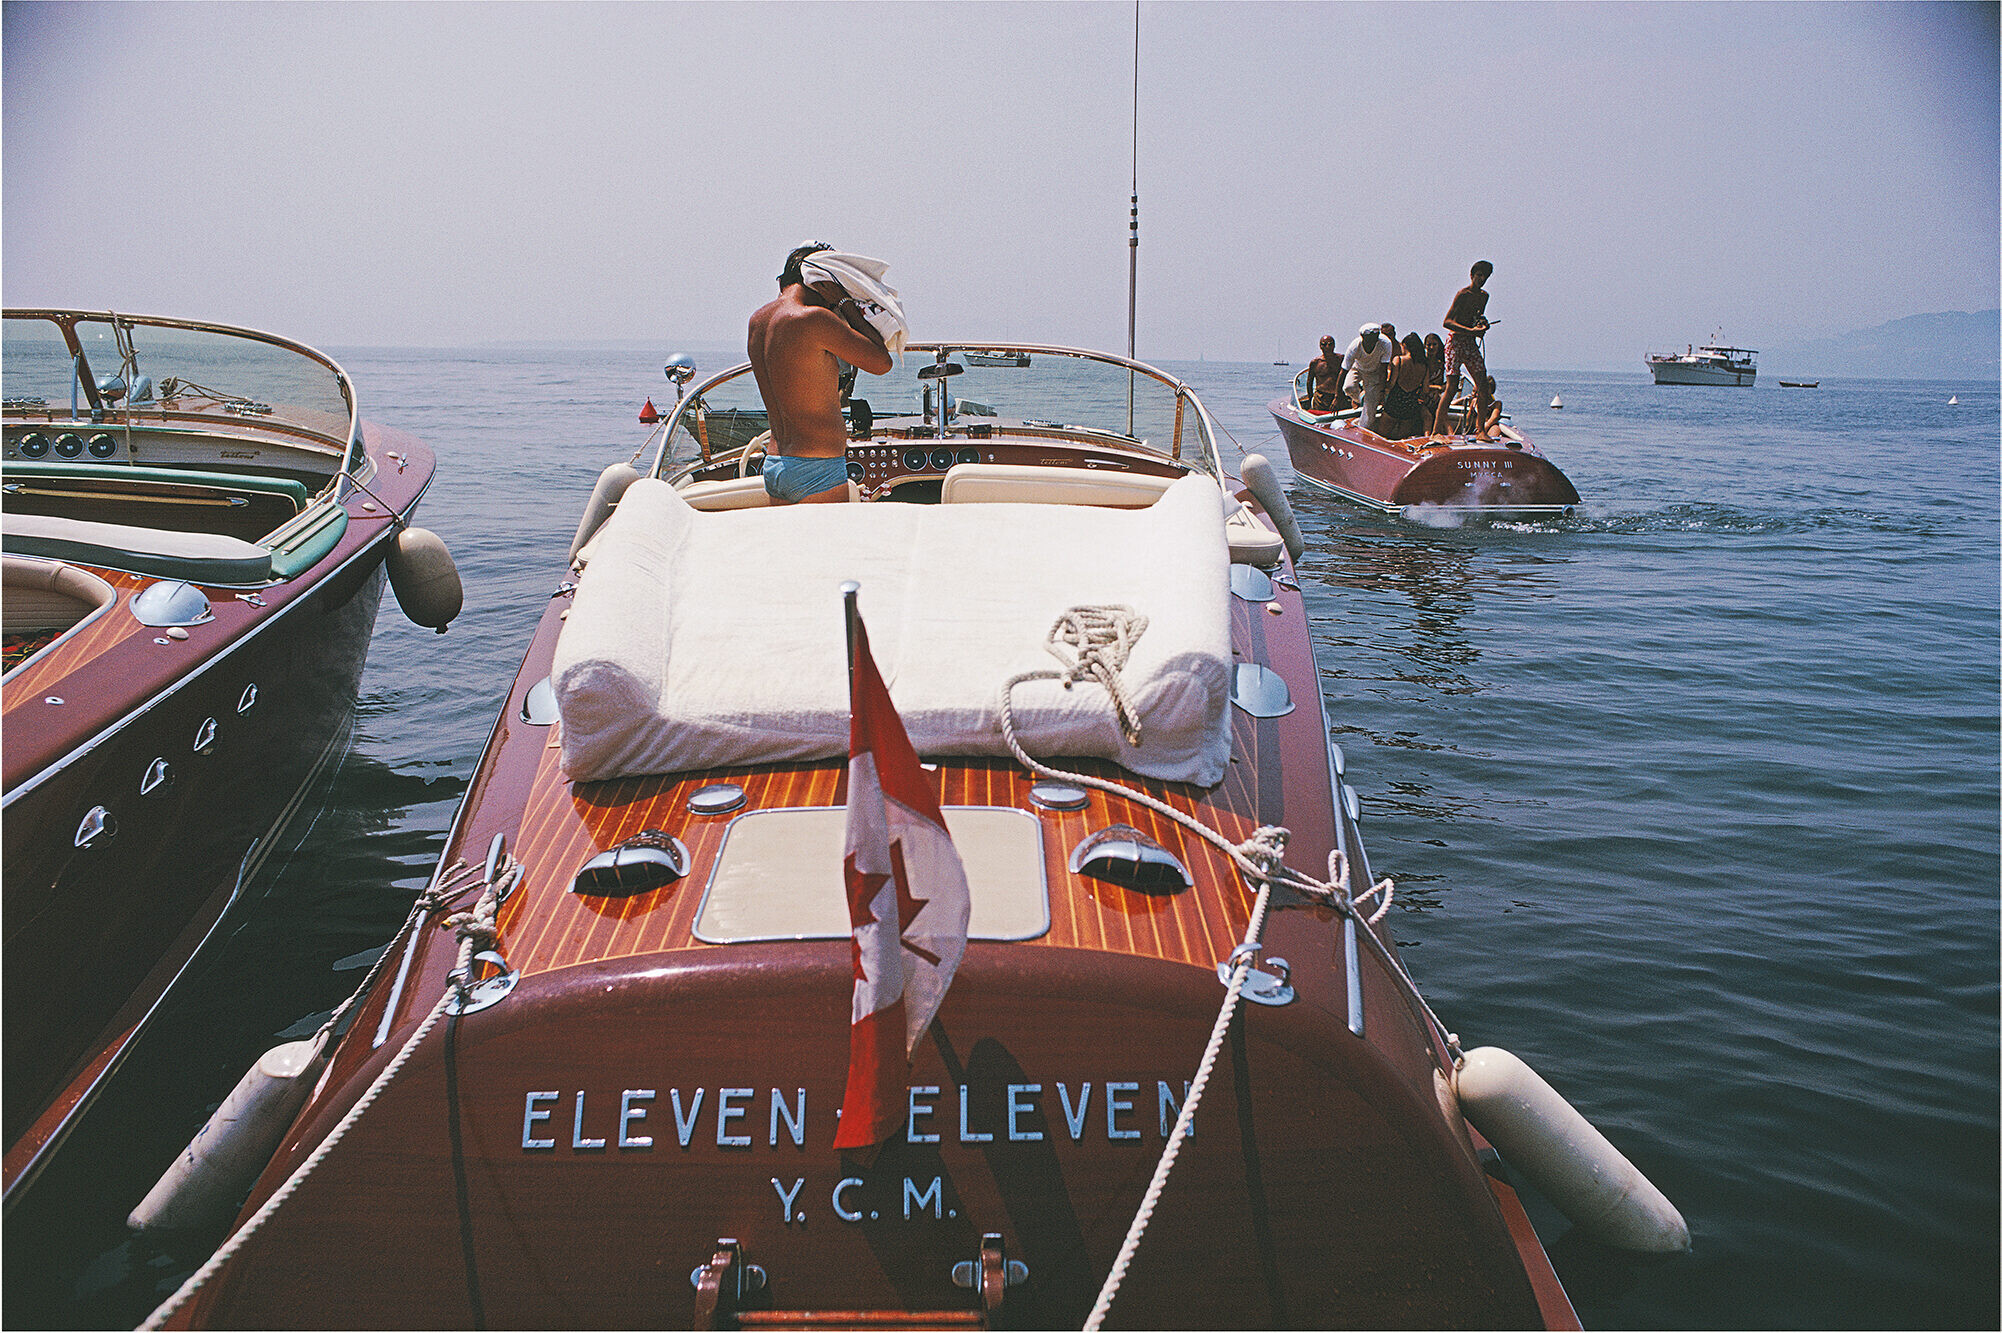 Моторные лодки на Антибе, 1969 год. Фотограф Слим Ааронс